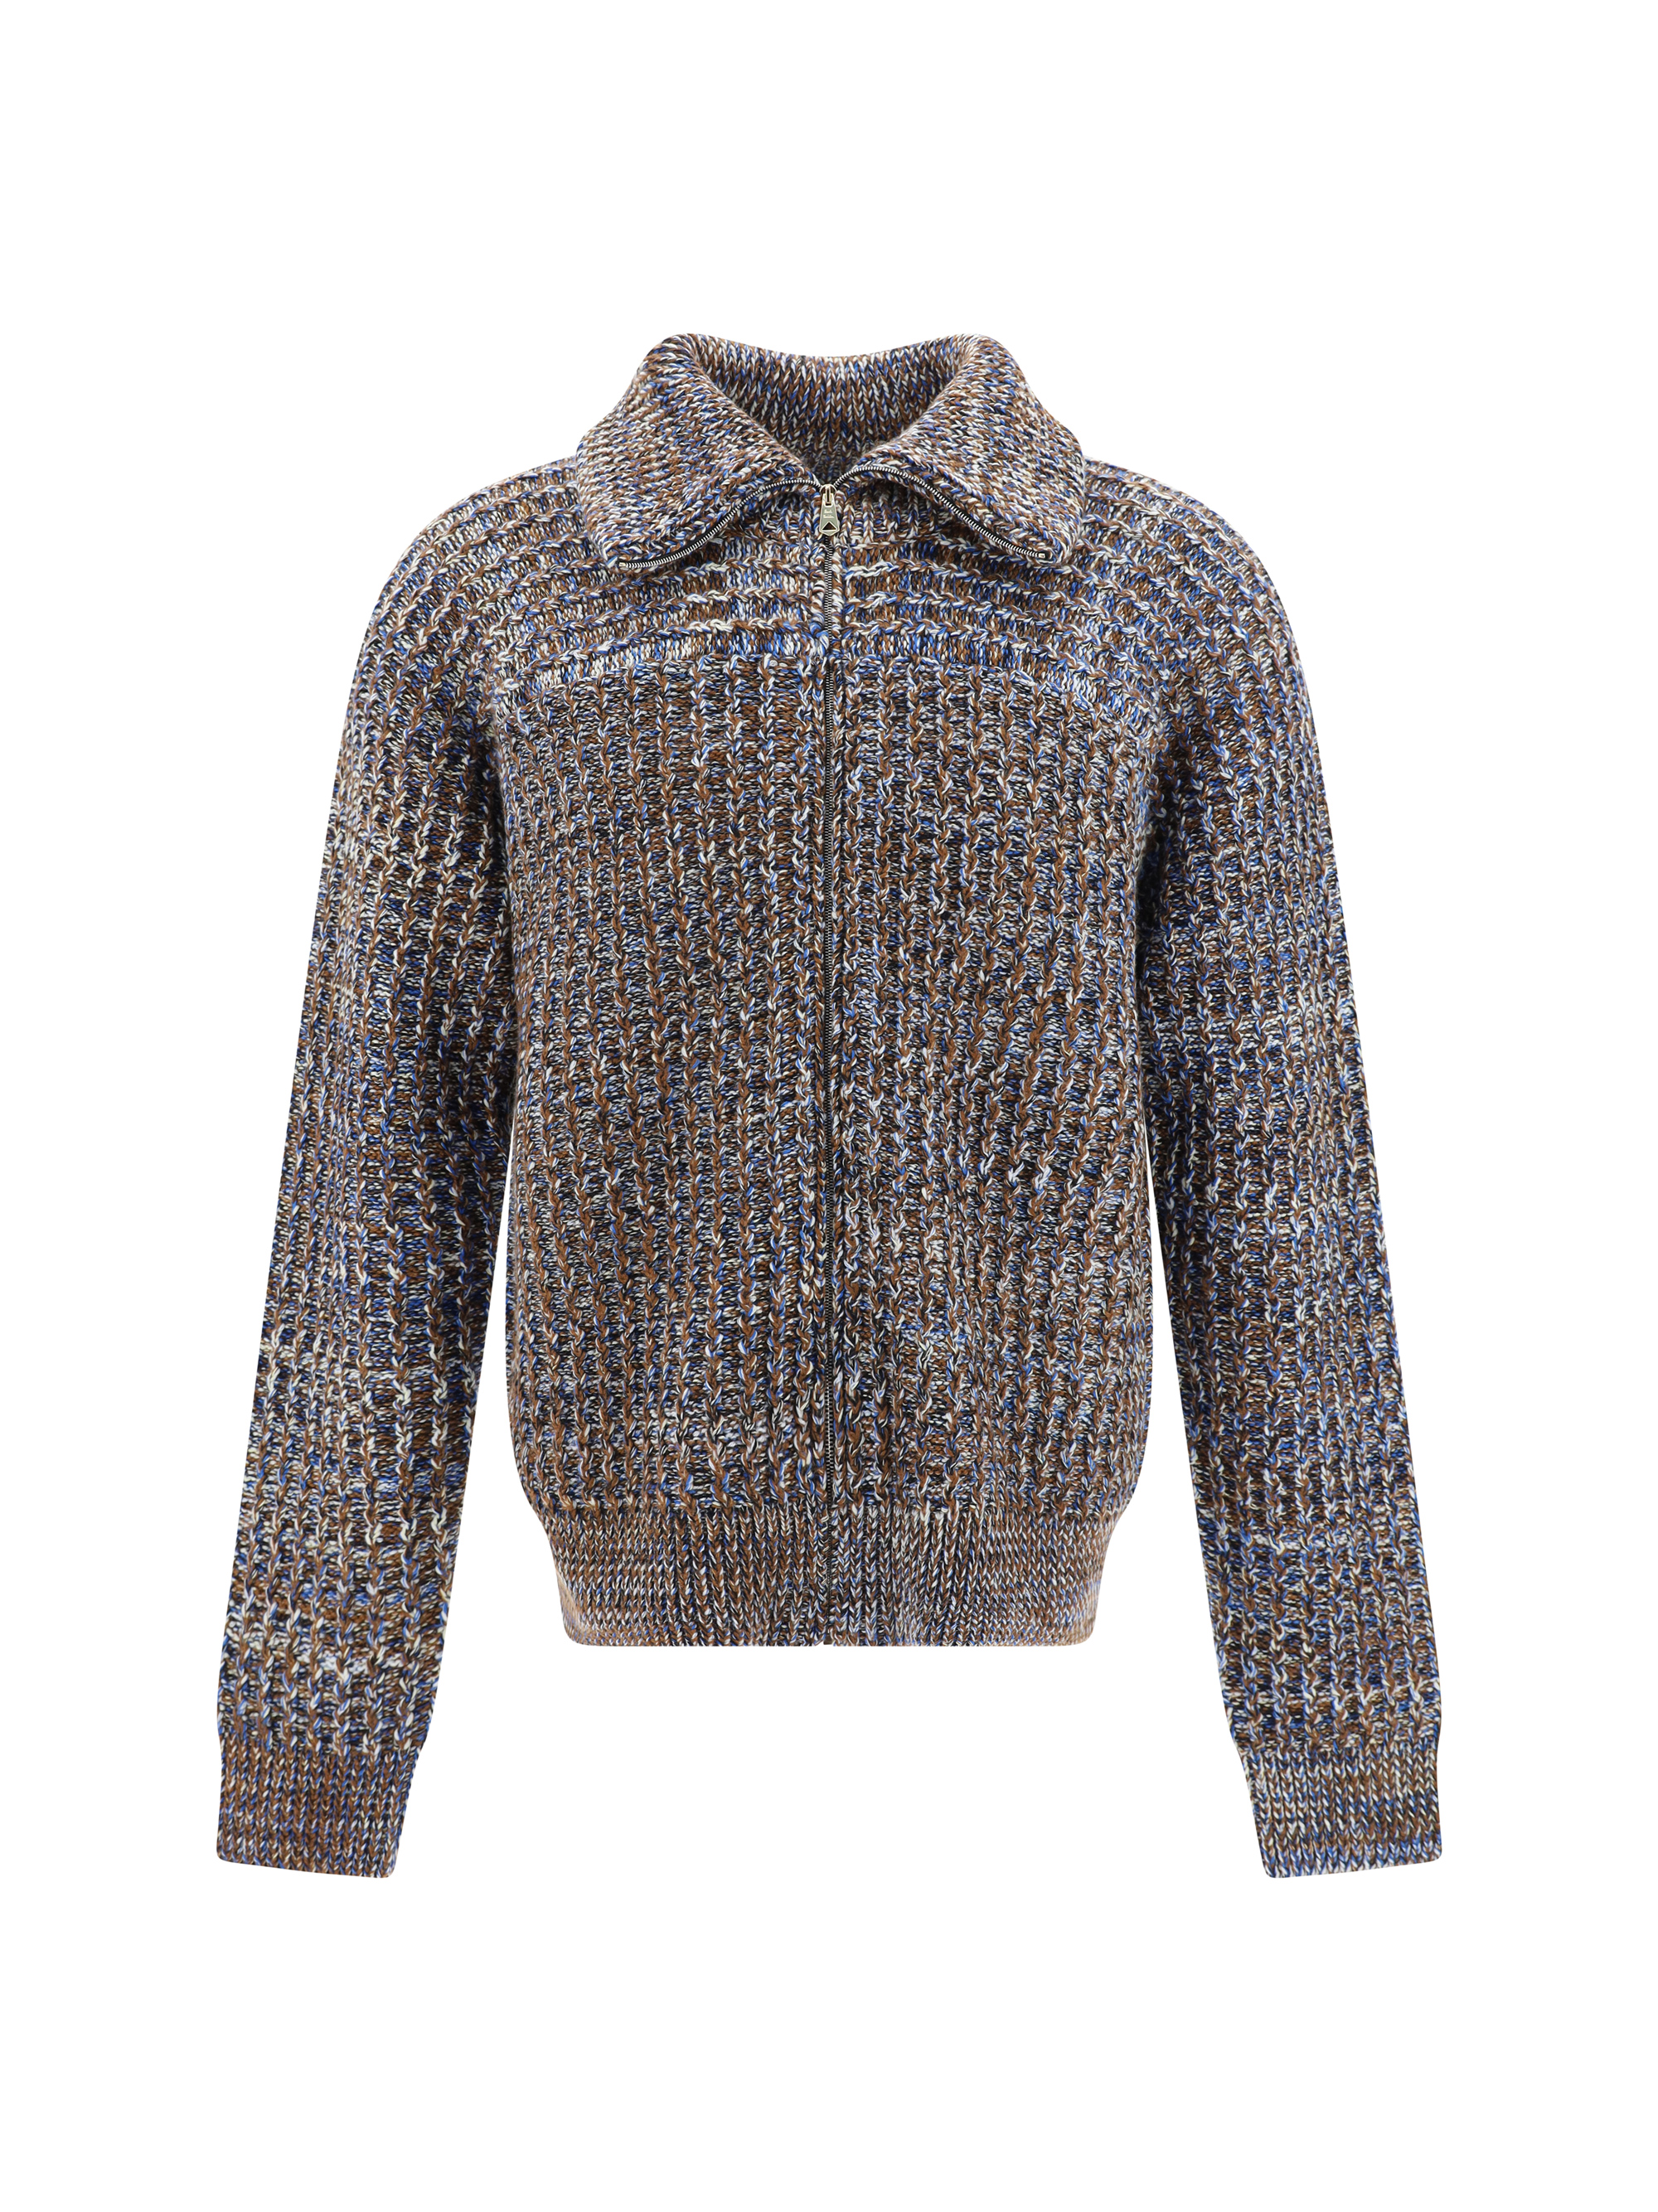 paul smith - sweater